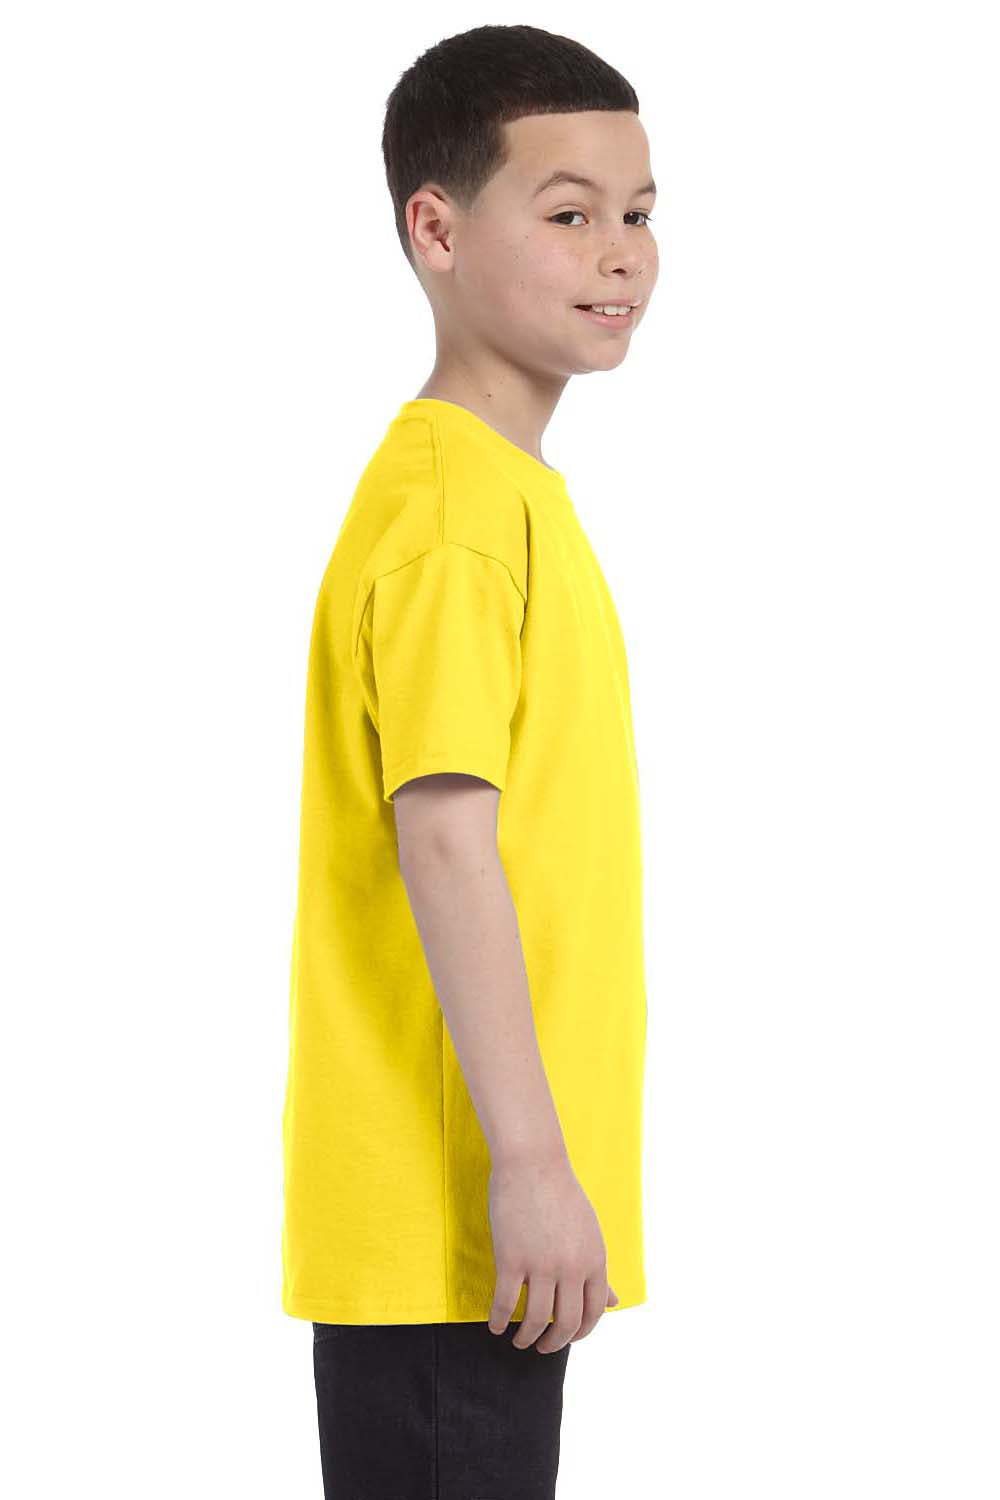 Hanes 54500 Youth ComfortSoft Short Sleeve Crewneck T-Shirt Yellow Side